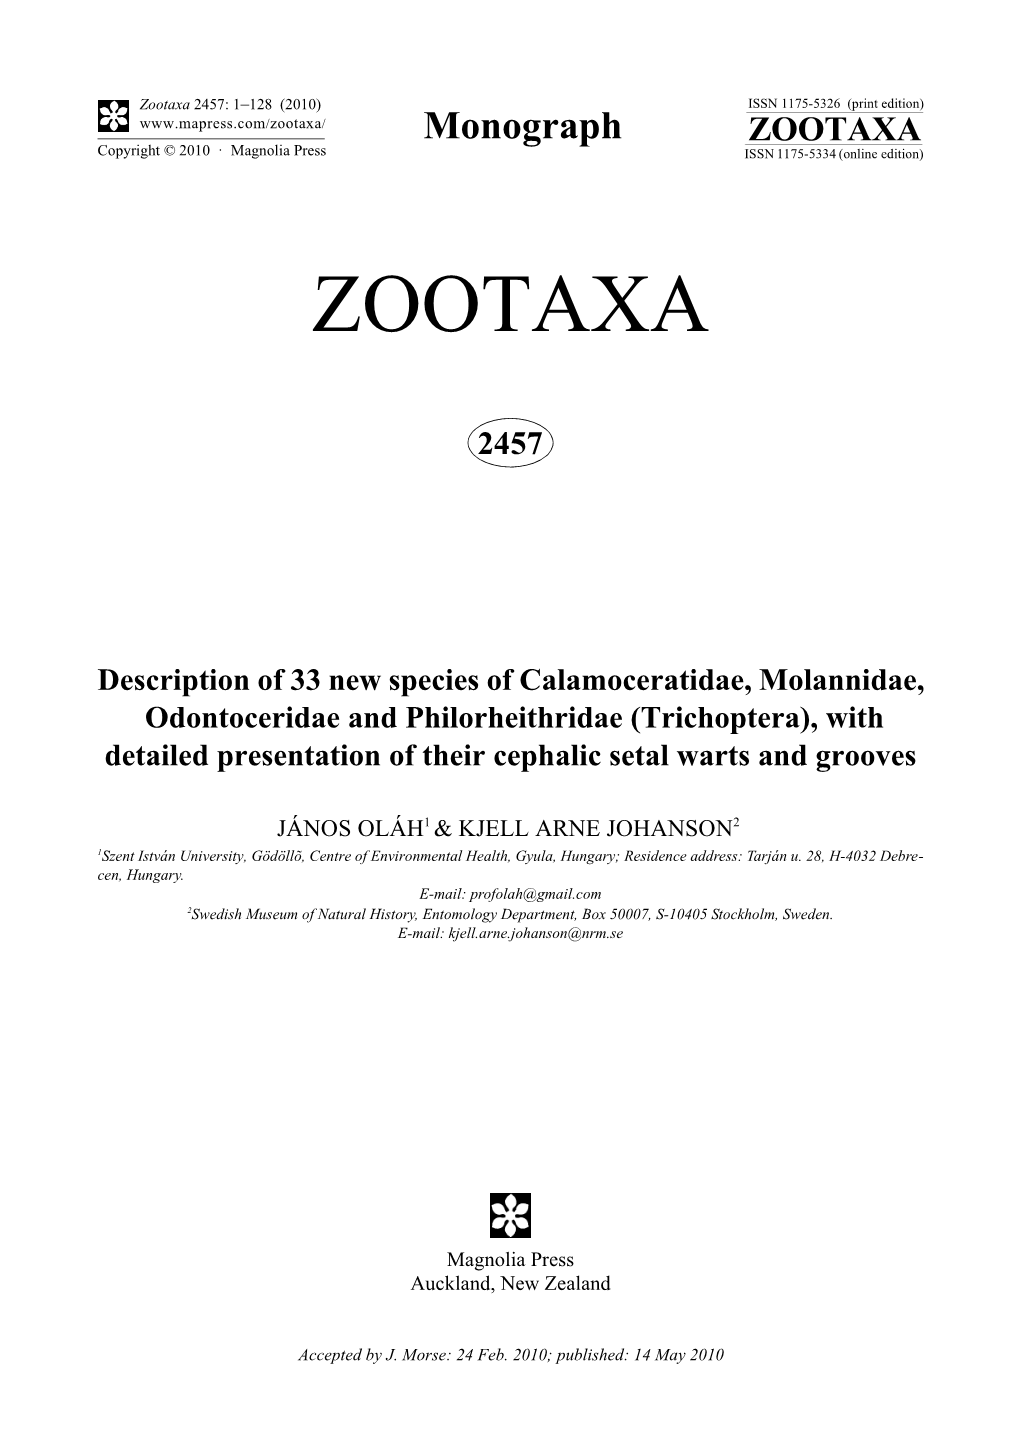 Zootaxa, Description of 33 New Species of Calamoceratidae, Molannidae